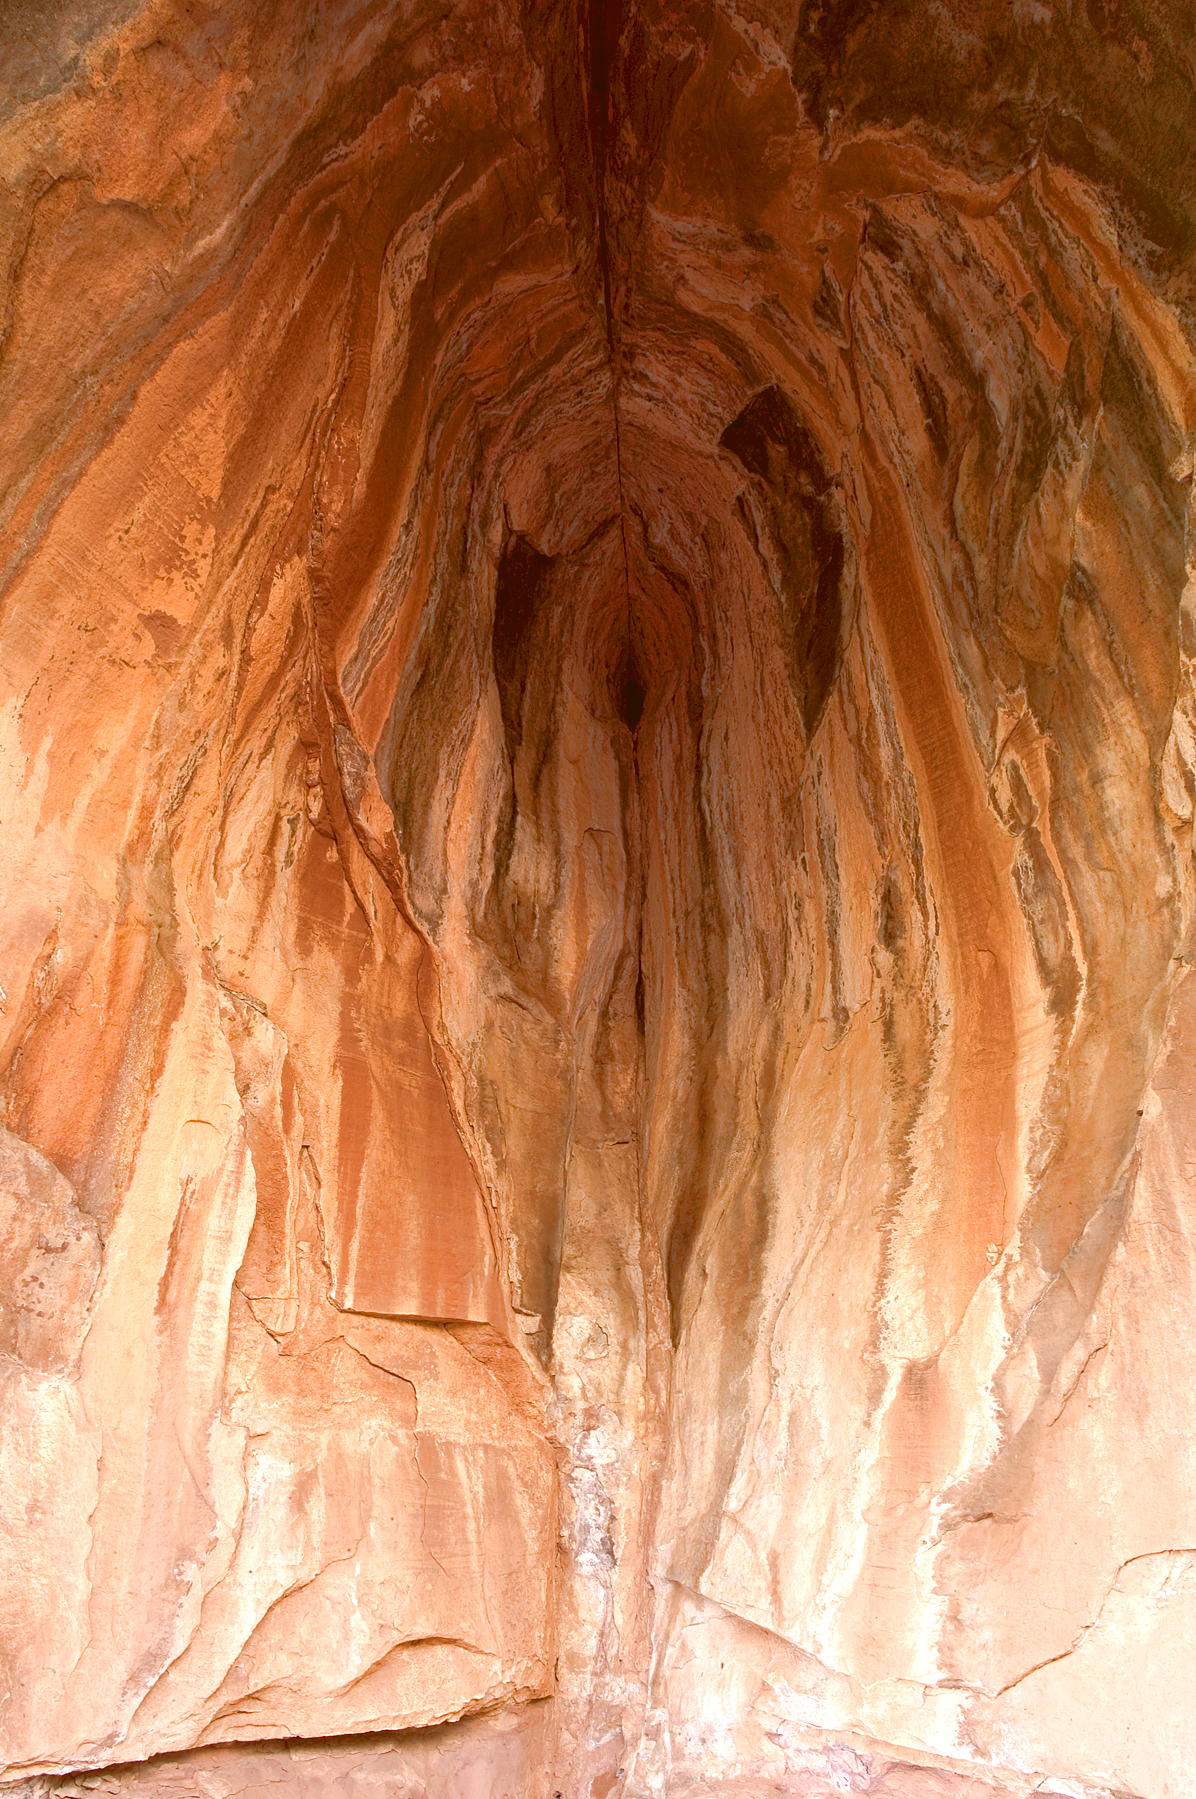 Inside the Cave copy.jpg